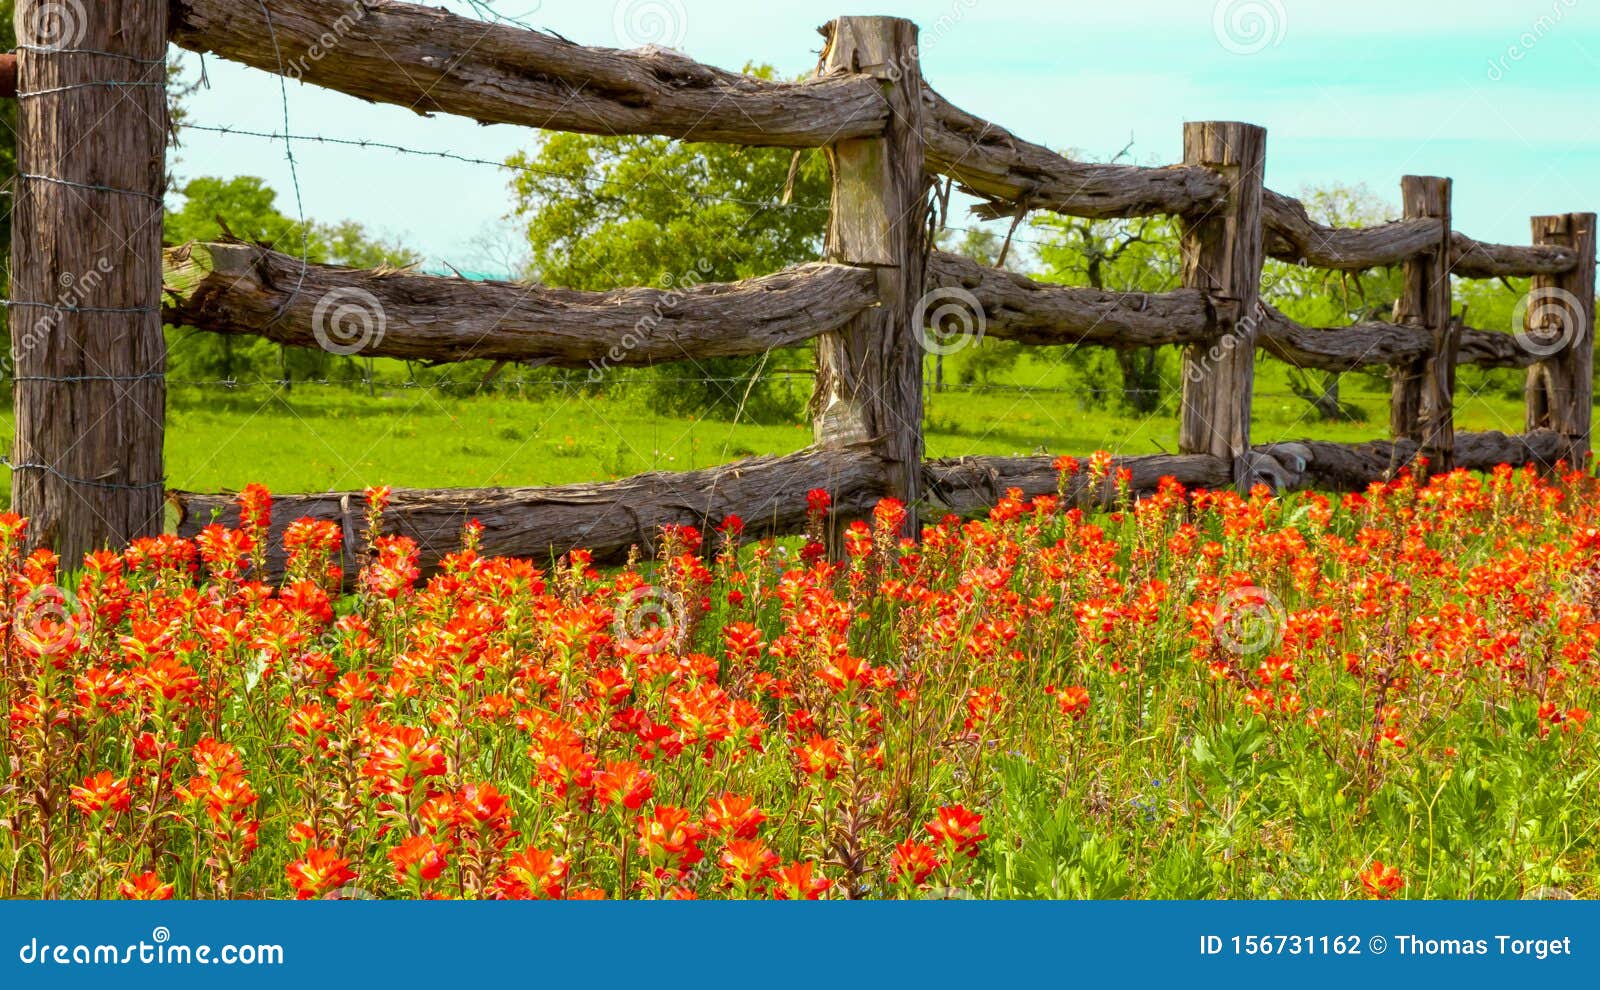 texas wildflowers near rustic wood fence